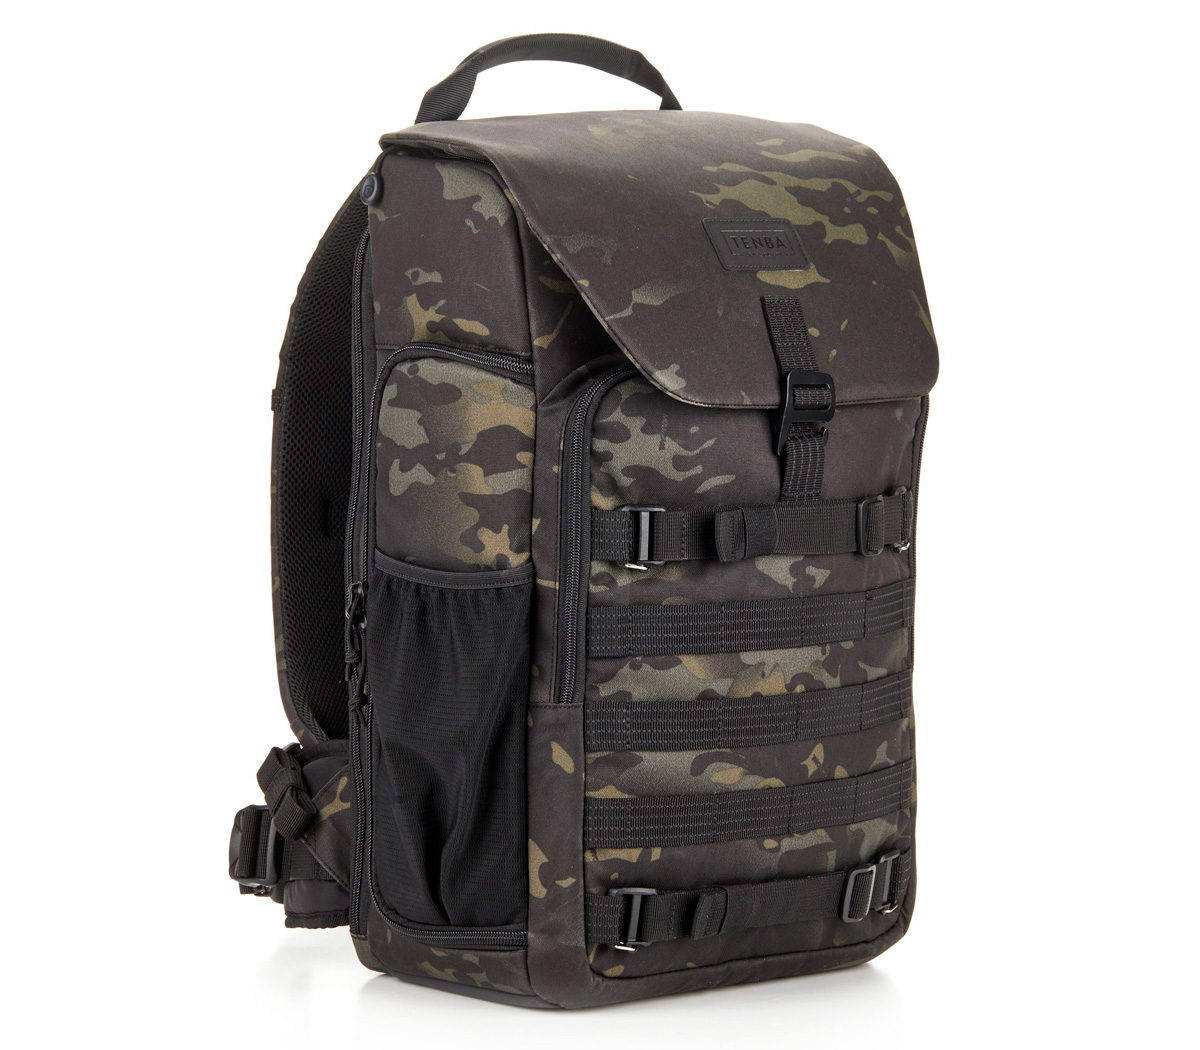 Рюкзак для видеокамеры Tenba Axis v2 Tactical LT Backpack камуфляж, 47х30х23 см